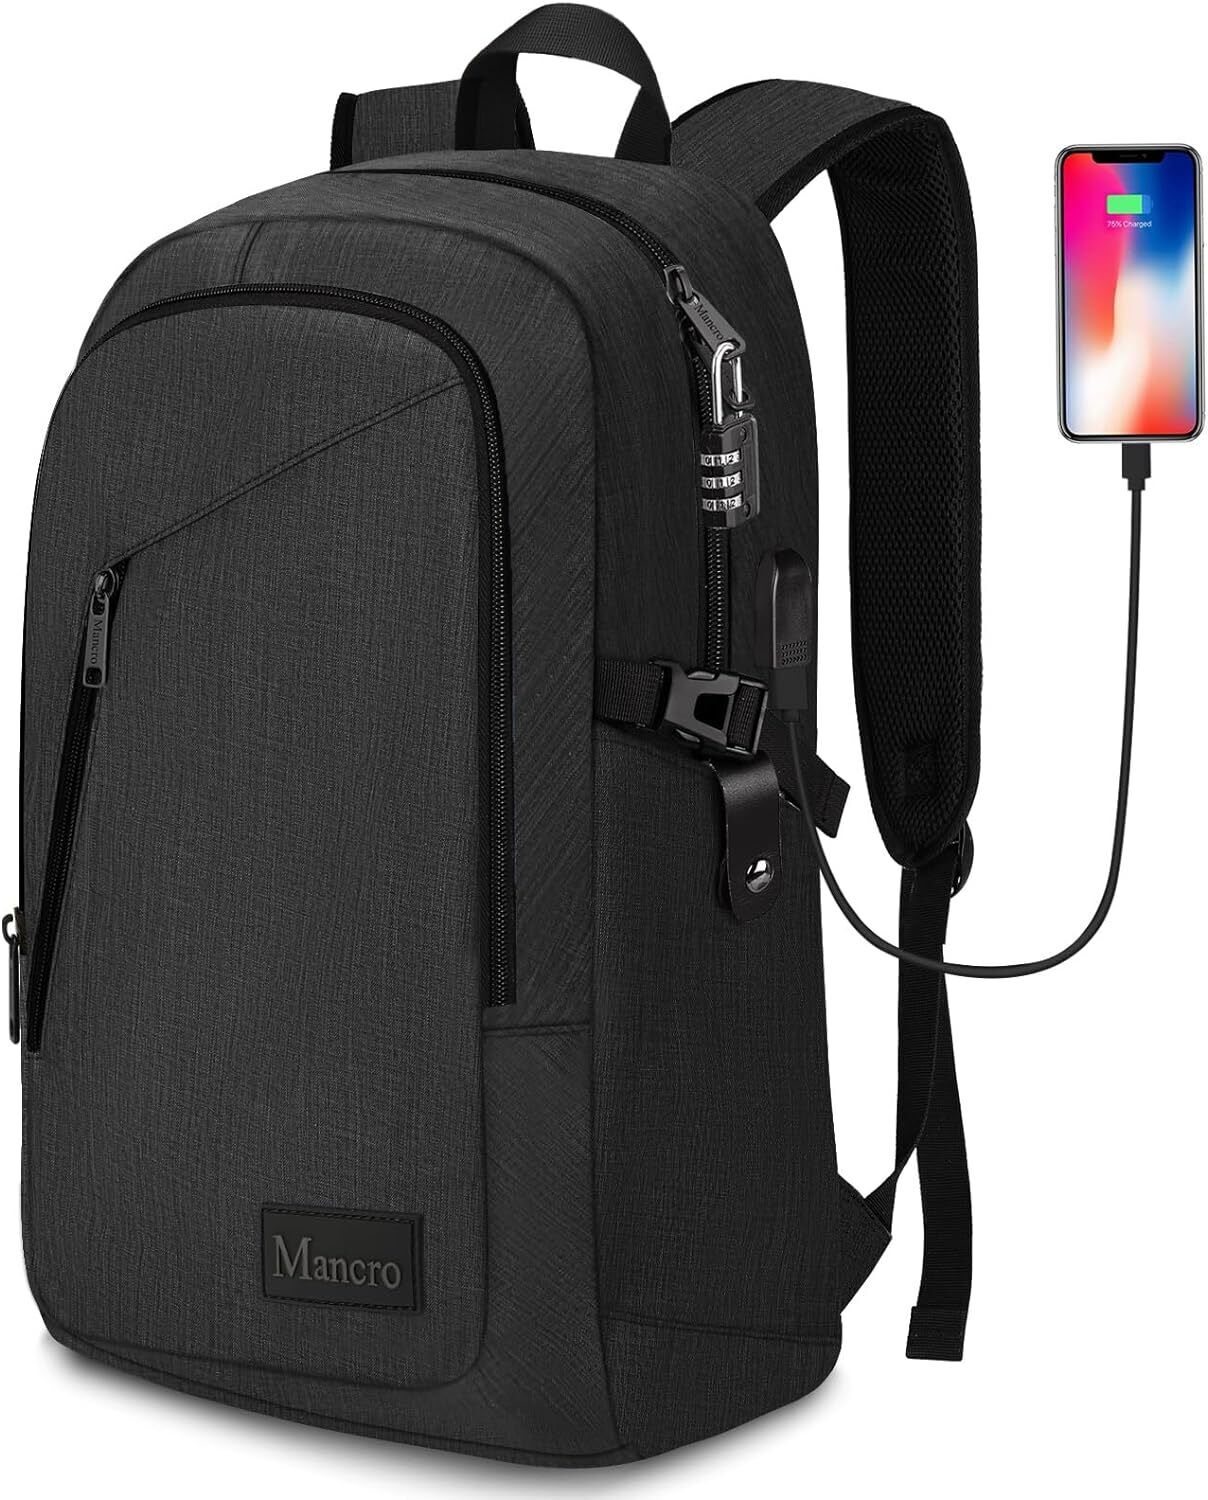 Business Travel Laptop Backpack, Anti Theft Slim Bag 15.6 inch, Black 